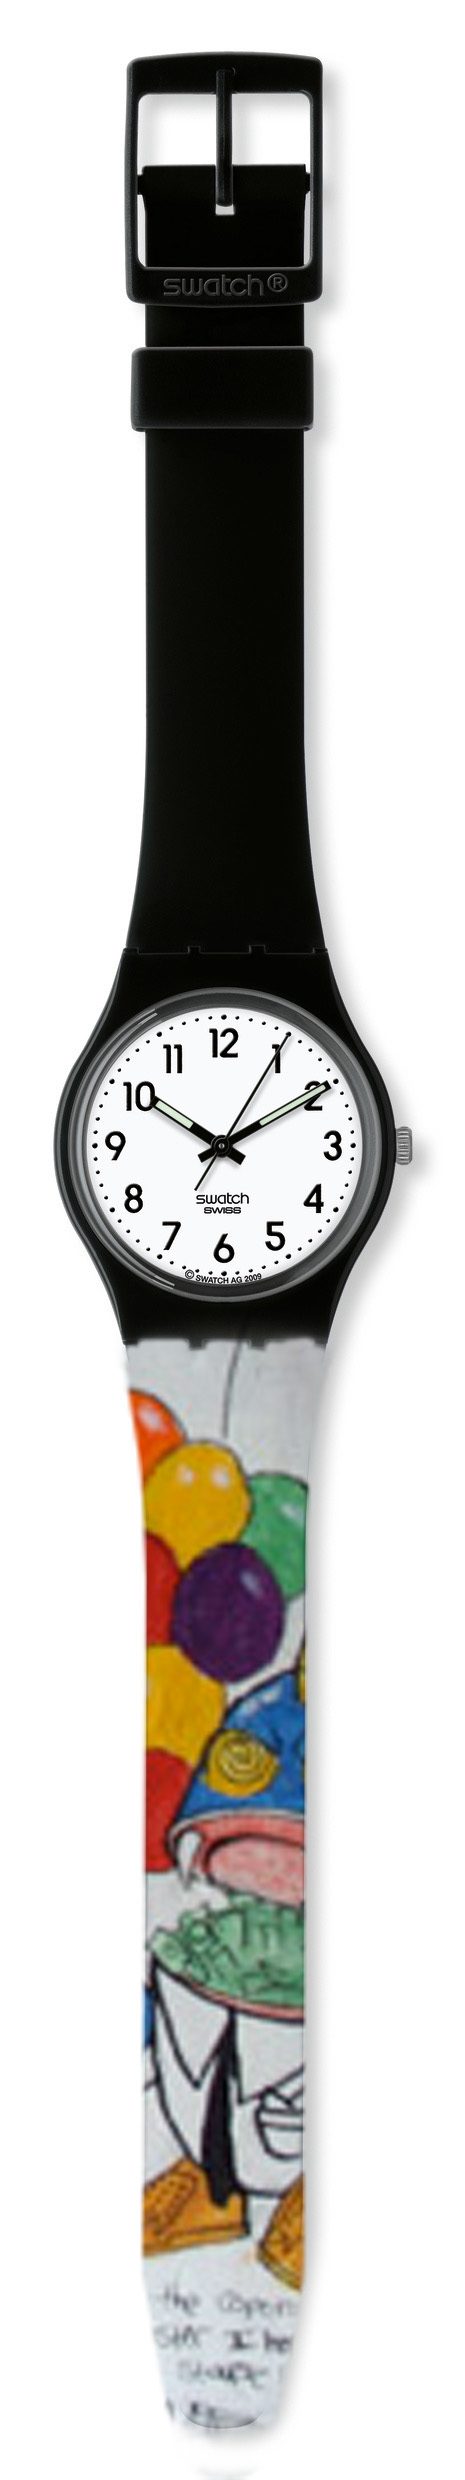 Watches concept design